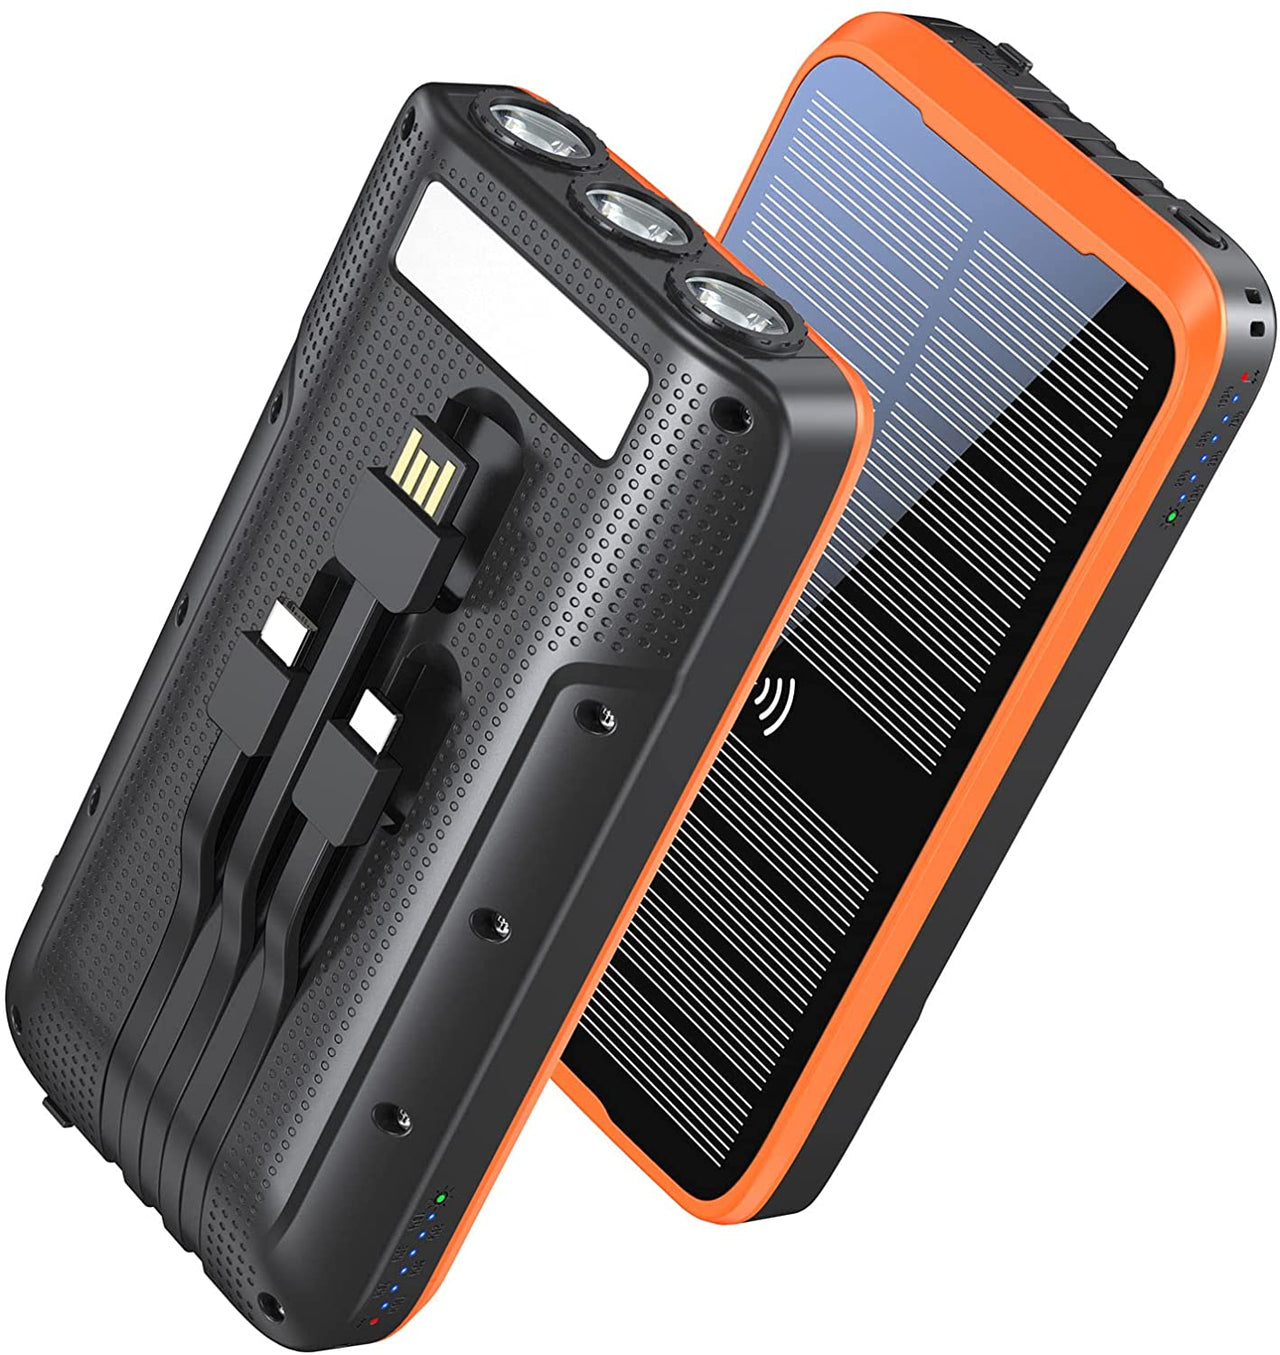 Cargador Portátil Solar ZONHOOD 38,800 mAh. Carga Rápida Inalambrica & USB  Compatible con iPhone & Multi